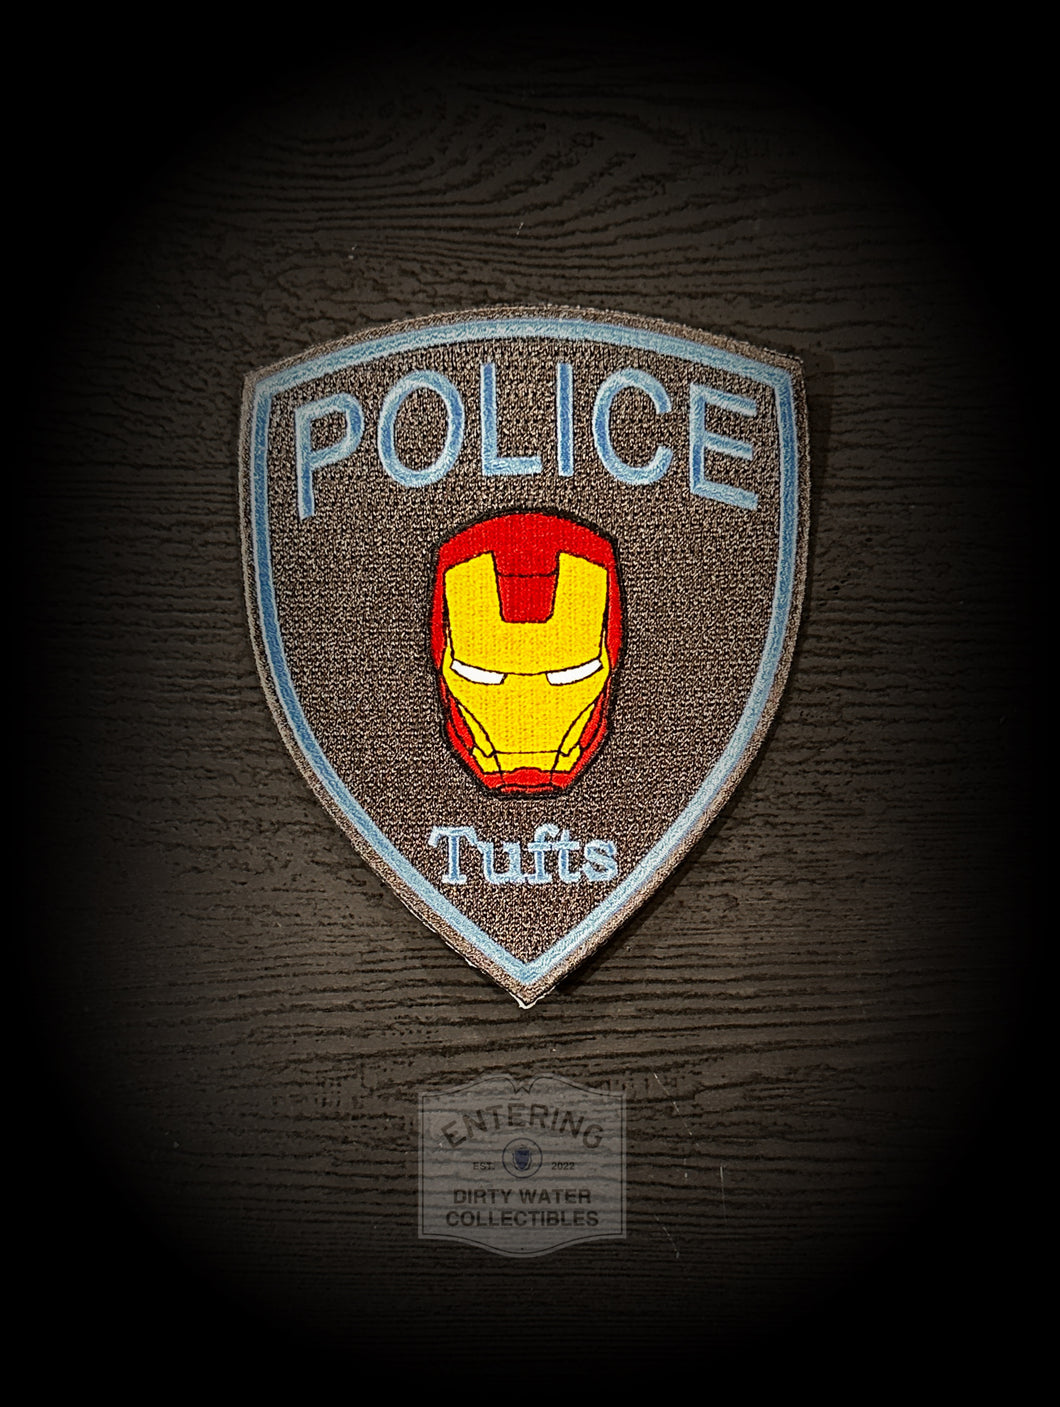 Tufts University MA PD Iron Man Cosplay patch